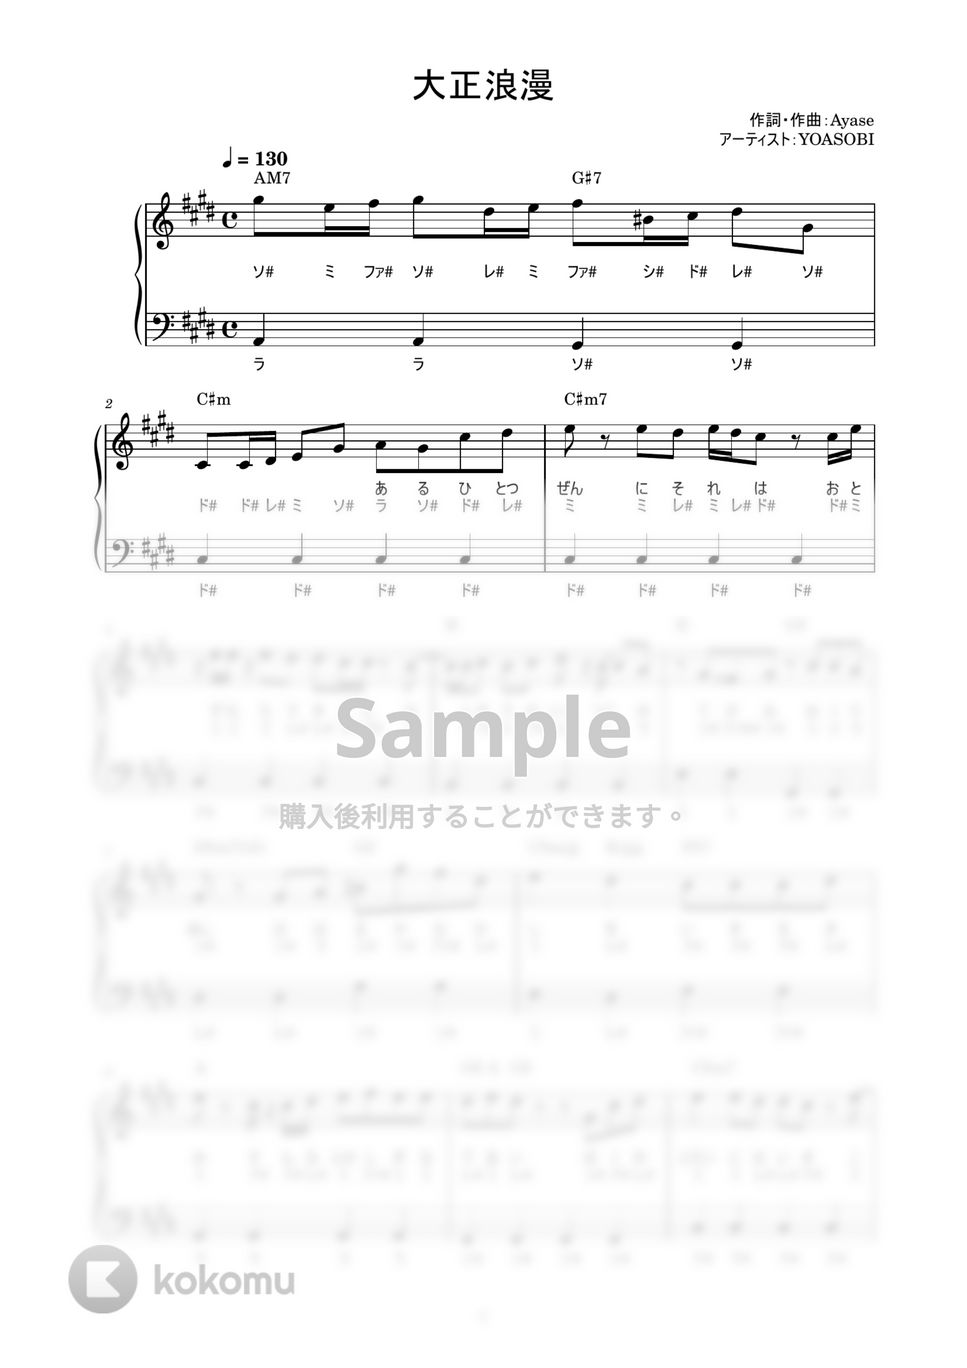 YOASOBI - 大正浪漫 (かんたん / 歌詞付き / ドレミ付き / 初心者) by piano.tokyo